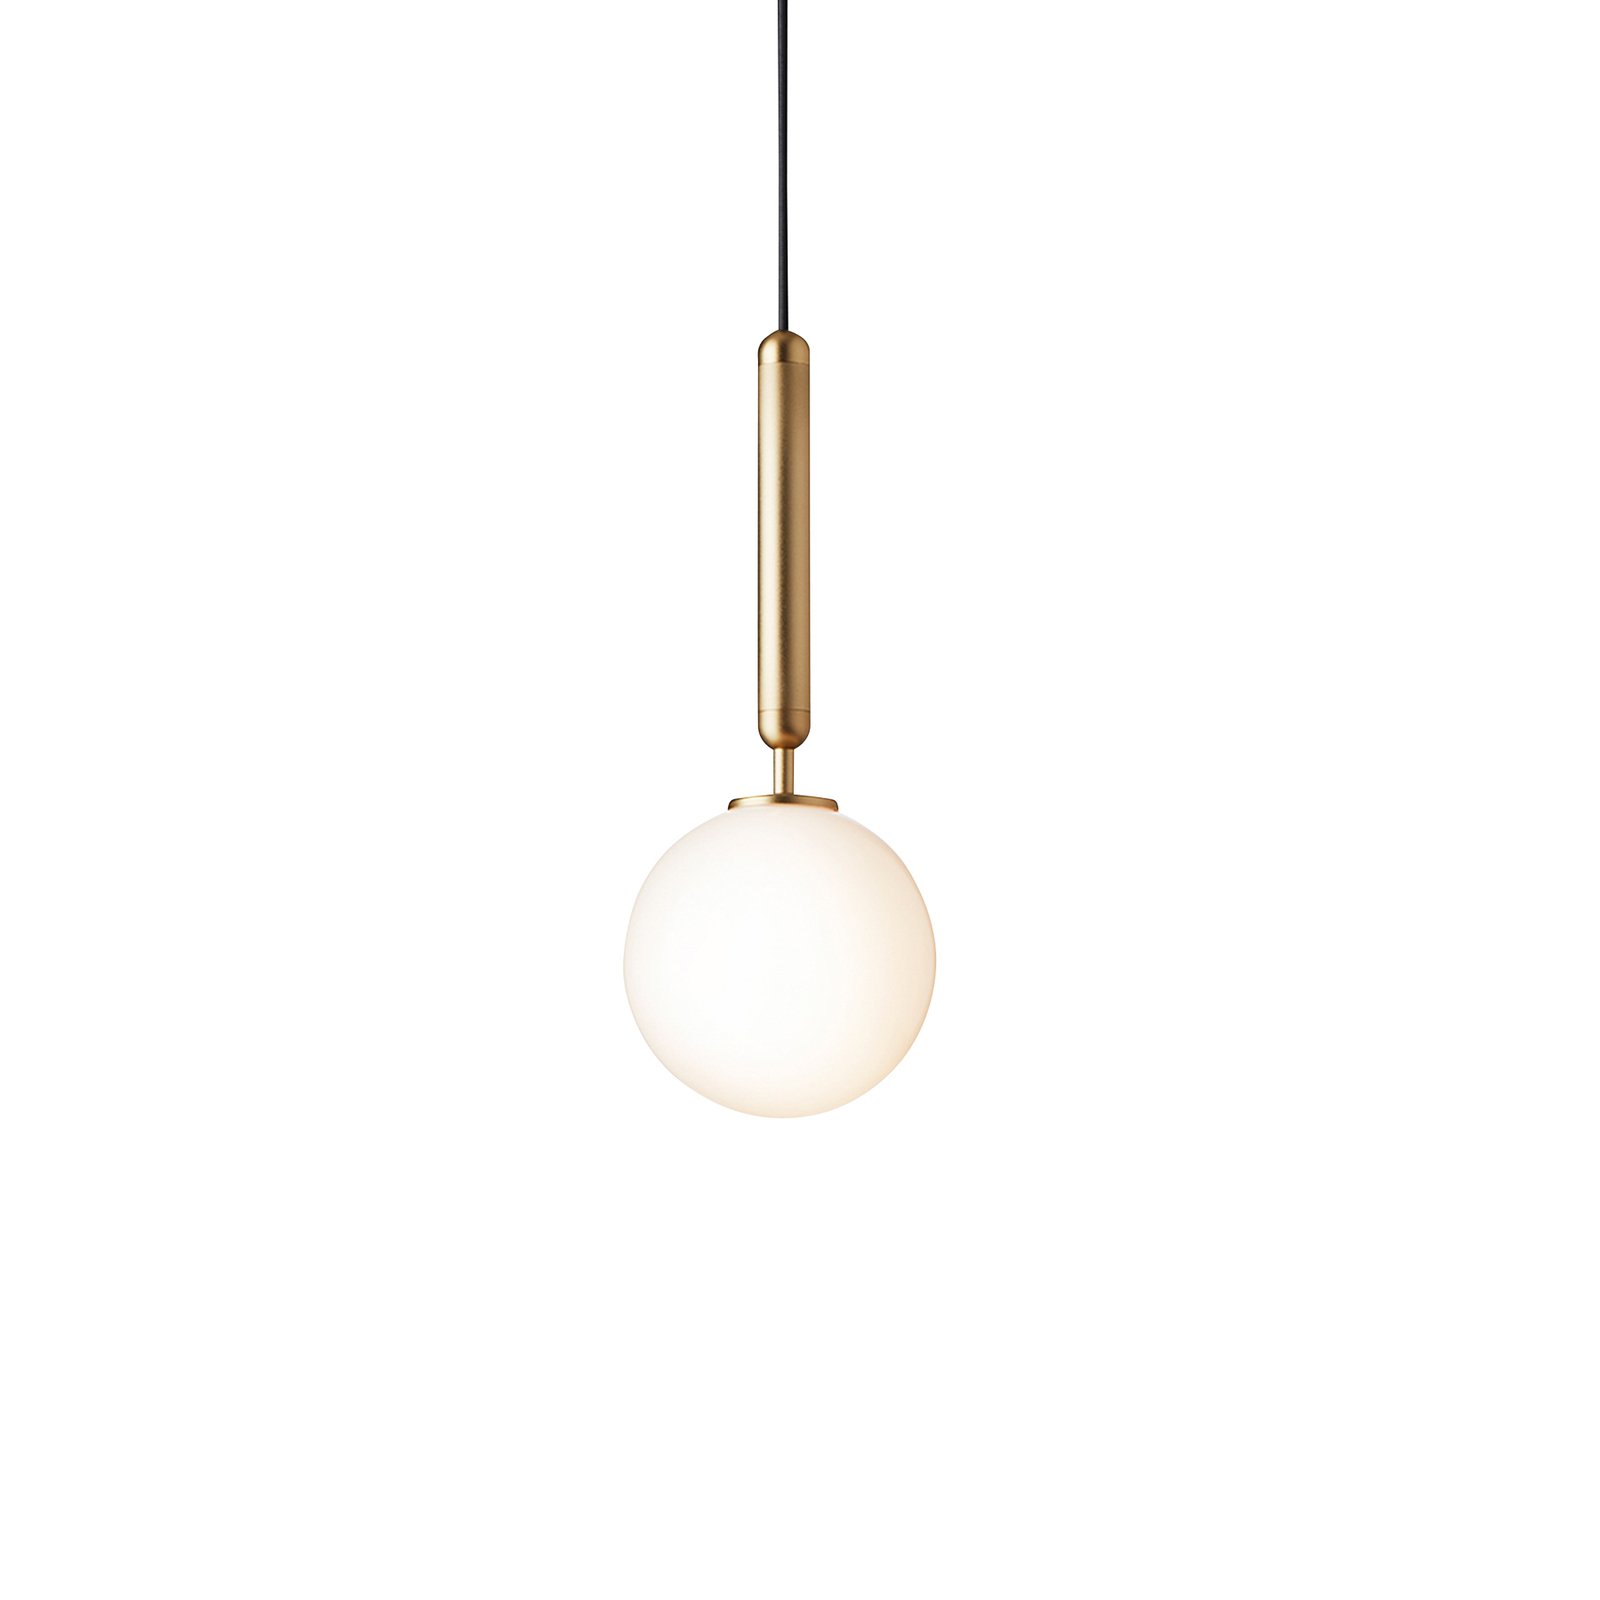 Nuura Miira 1 hanging light 1-bulb brass/white